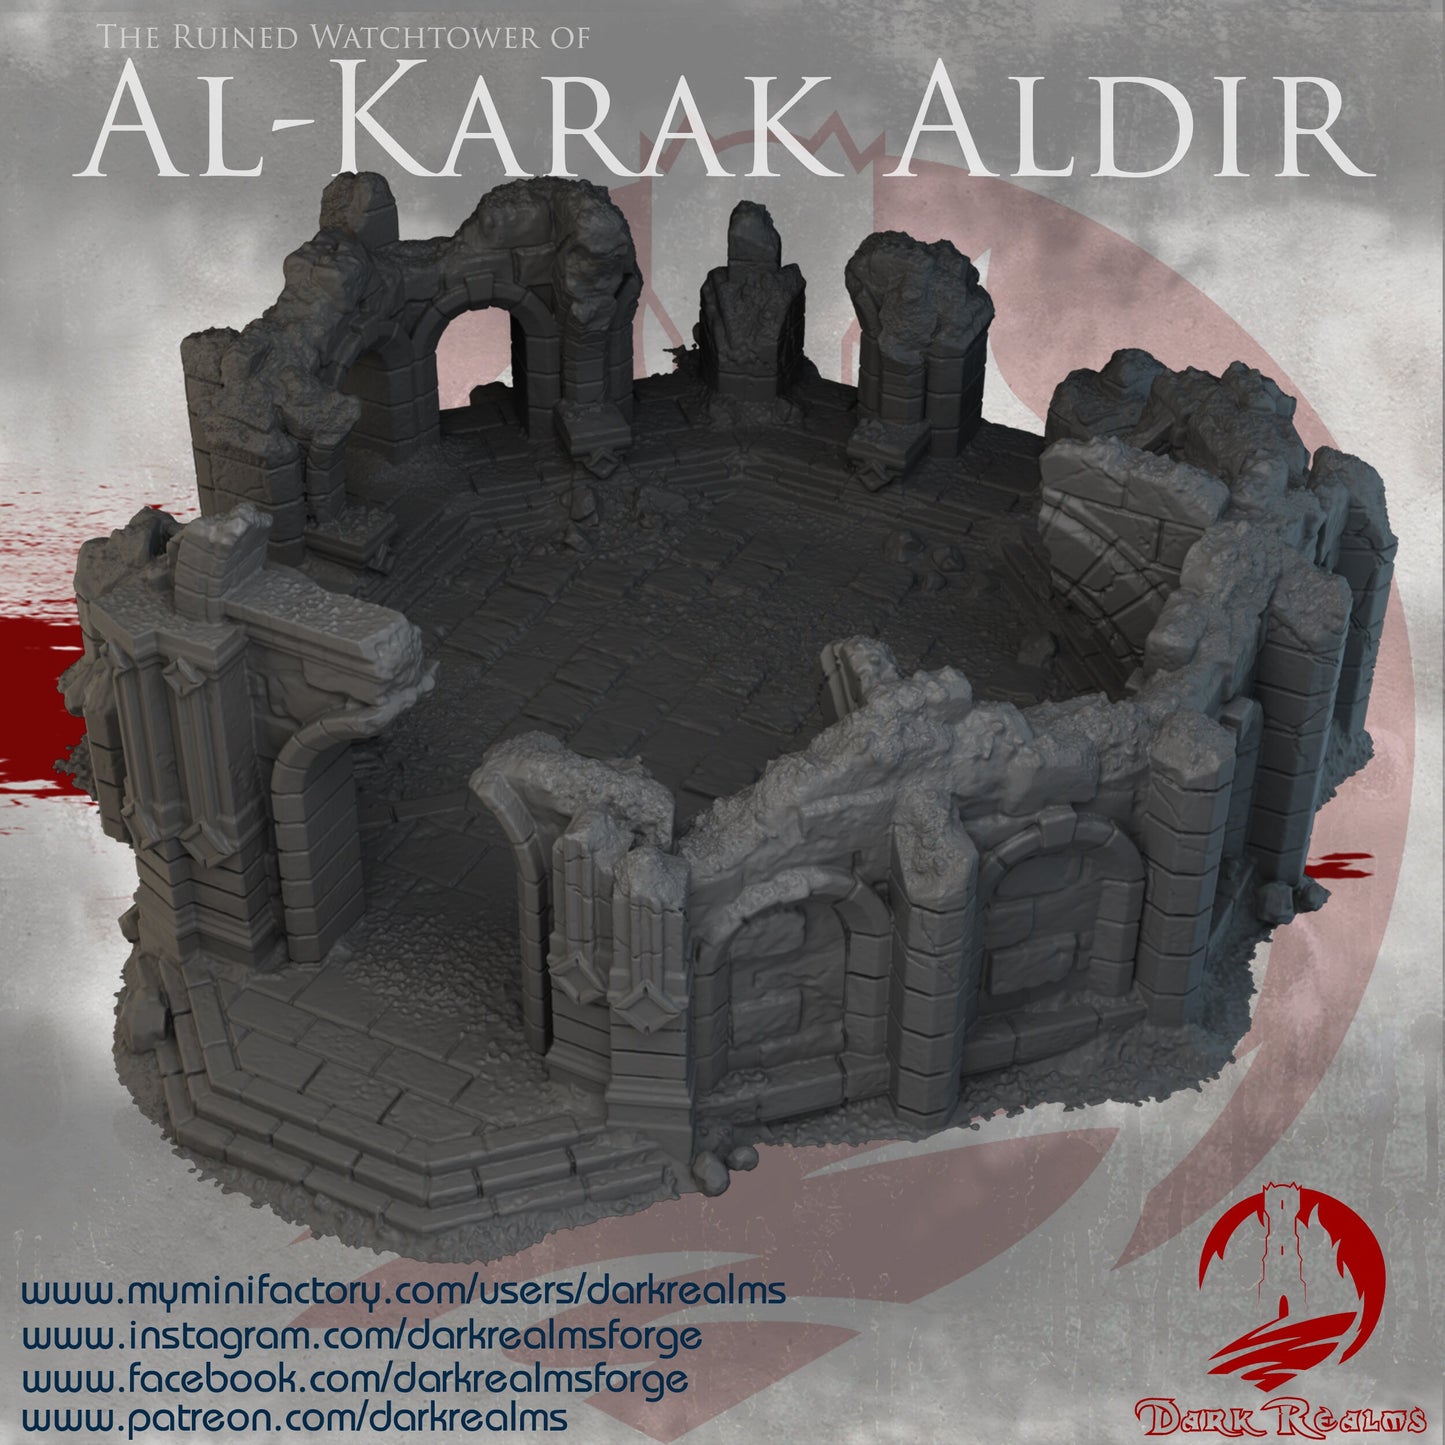 Ruins of Aldir, Al Karak Aldir Ruins, Watchtower of Aldir, Ruined Terrain, Aldir WatchTower, Ruins, medieval, Dungeons and Dragons, Tabletop Terrain, wargaming, rpg terrain, fantasy terrain, adventure, ruins of old, arkenfel ruins, Ruin, watchtower